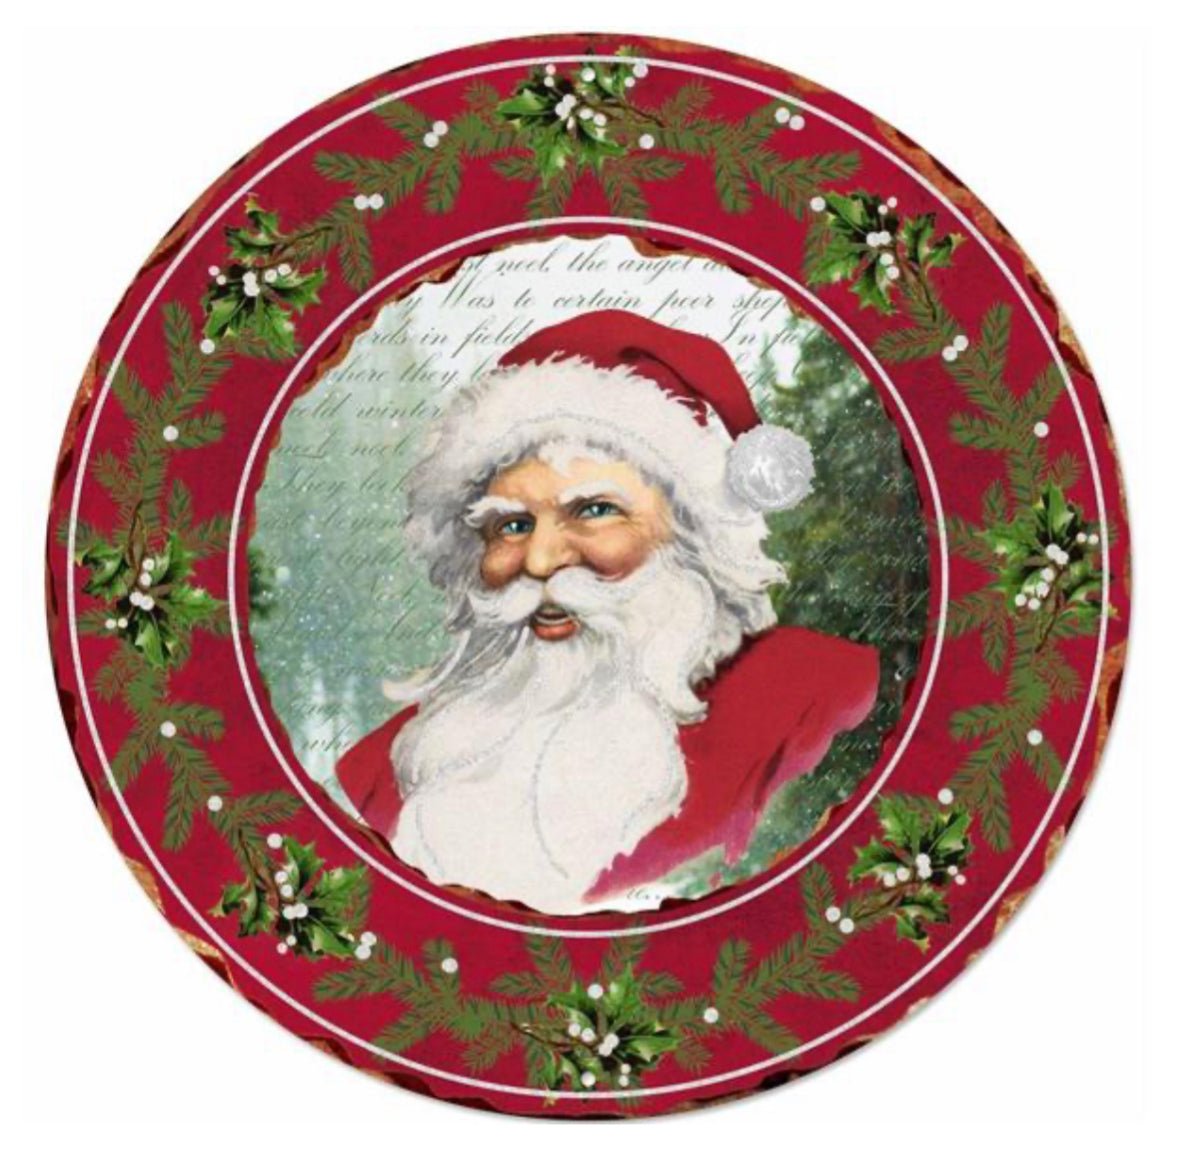 Santa claus round sign - Greenery MarketSeasonal & Holiday DecorationsMD0740